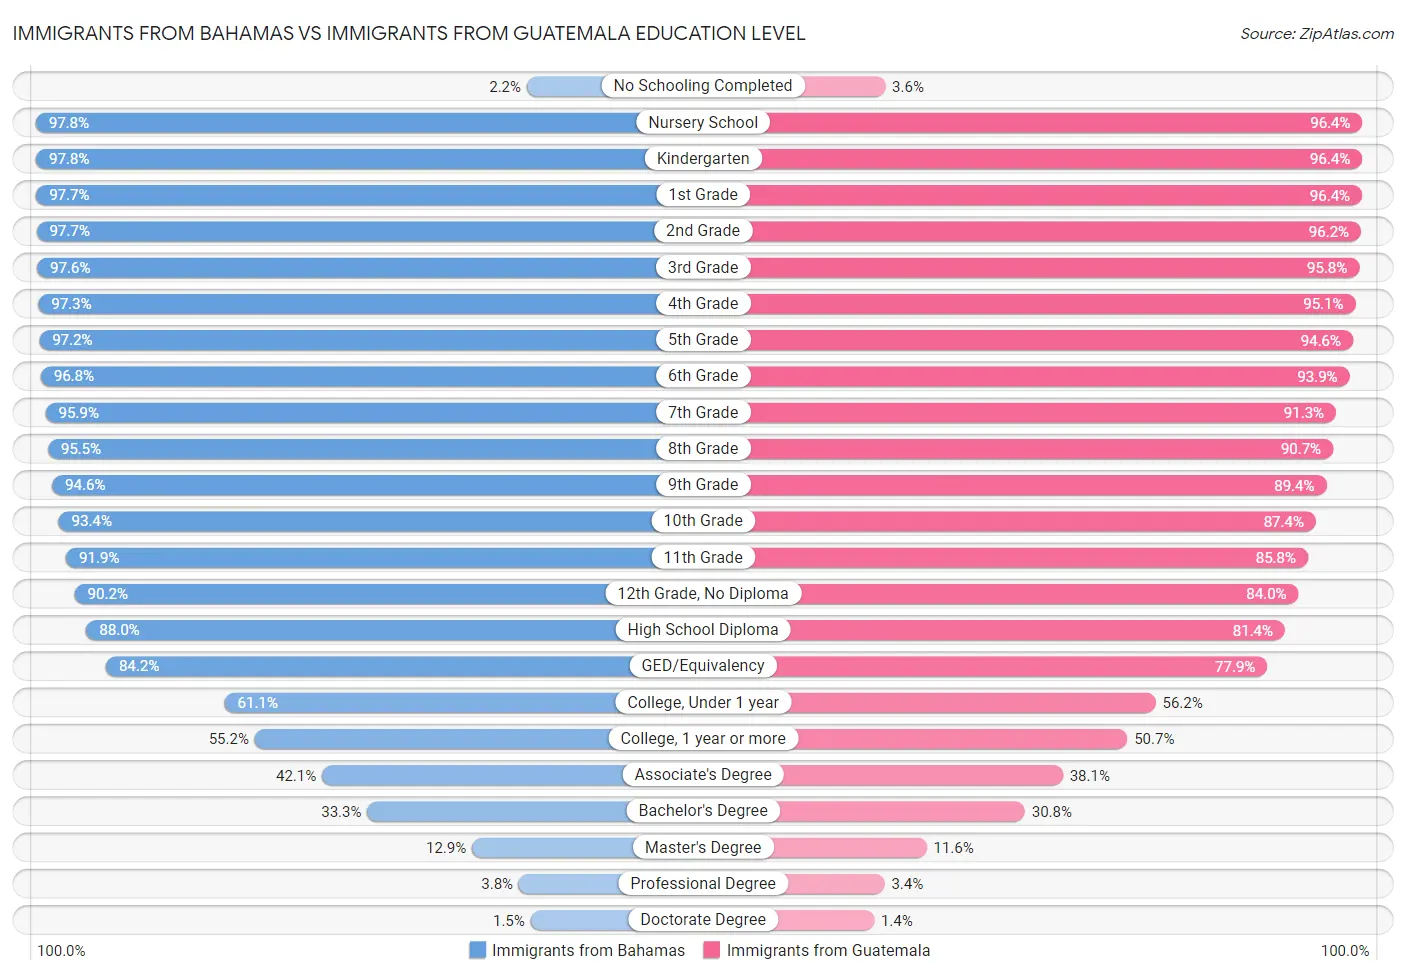 Immigrants from Bahamas vs Immigrants from Guatemala Education Level